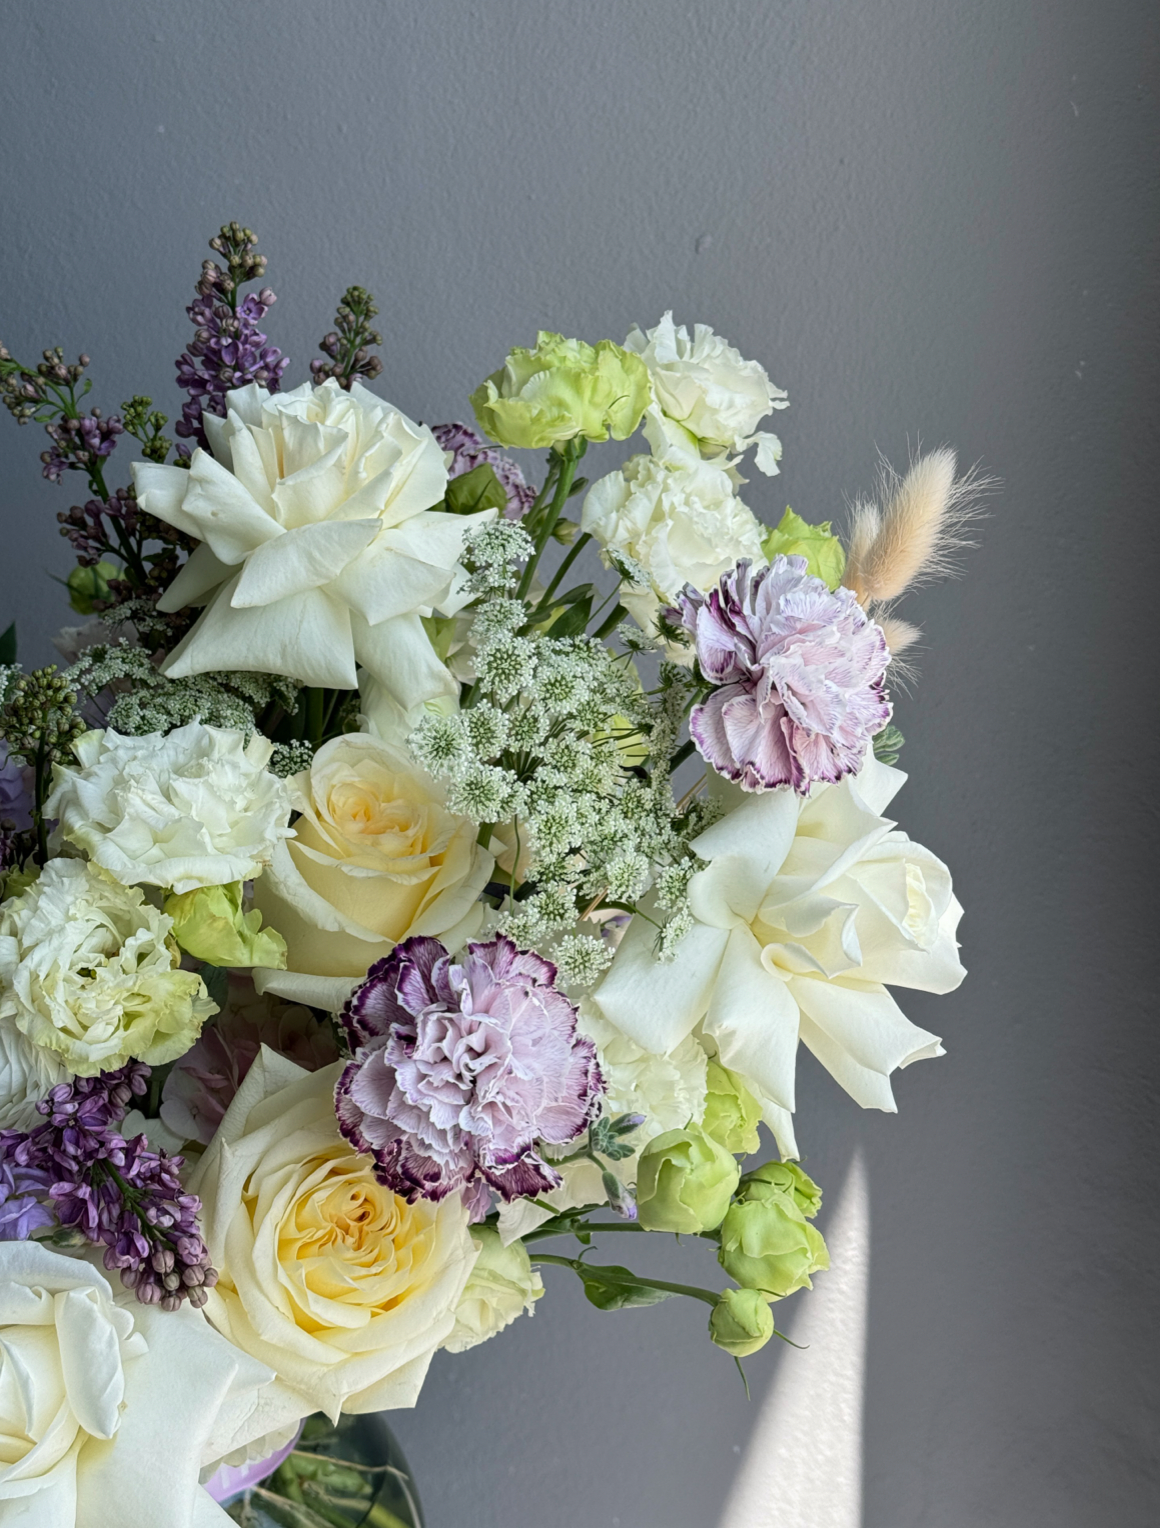 Floral arrangement in a vase ‘Garden Mix’ - lilacs, roses